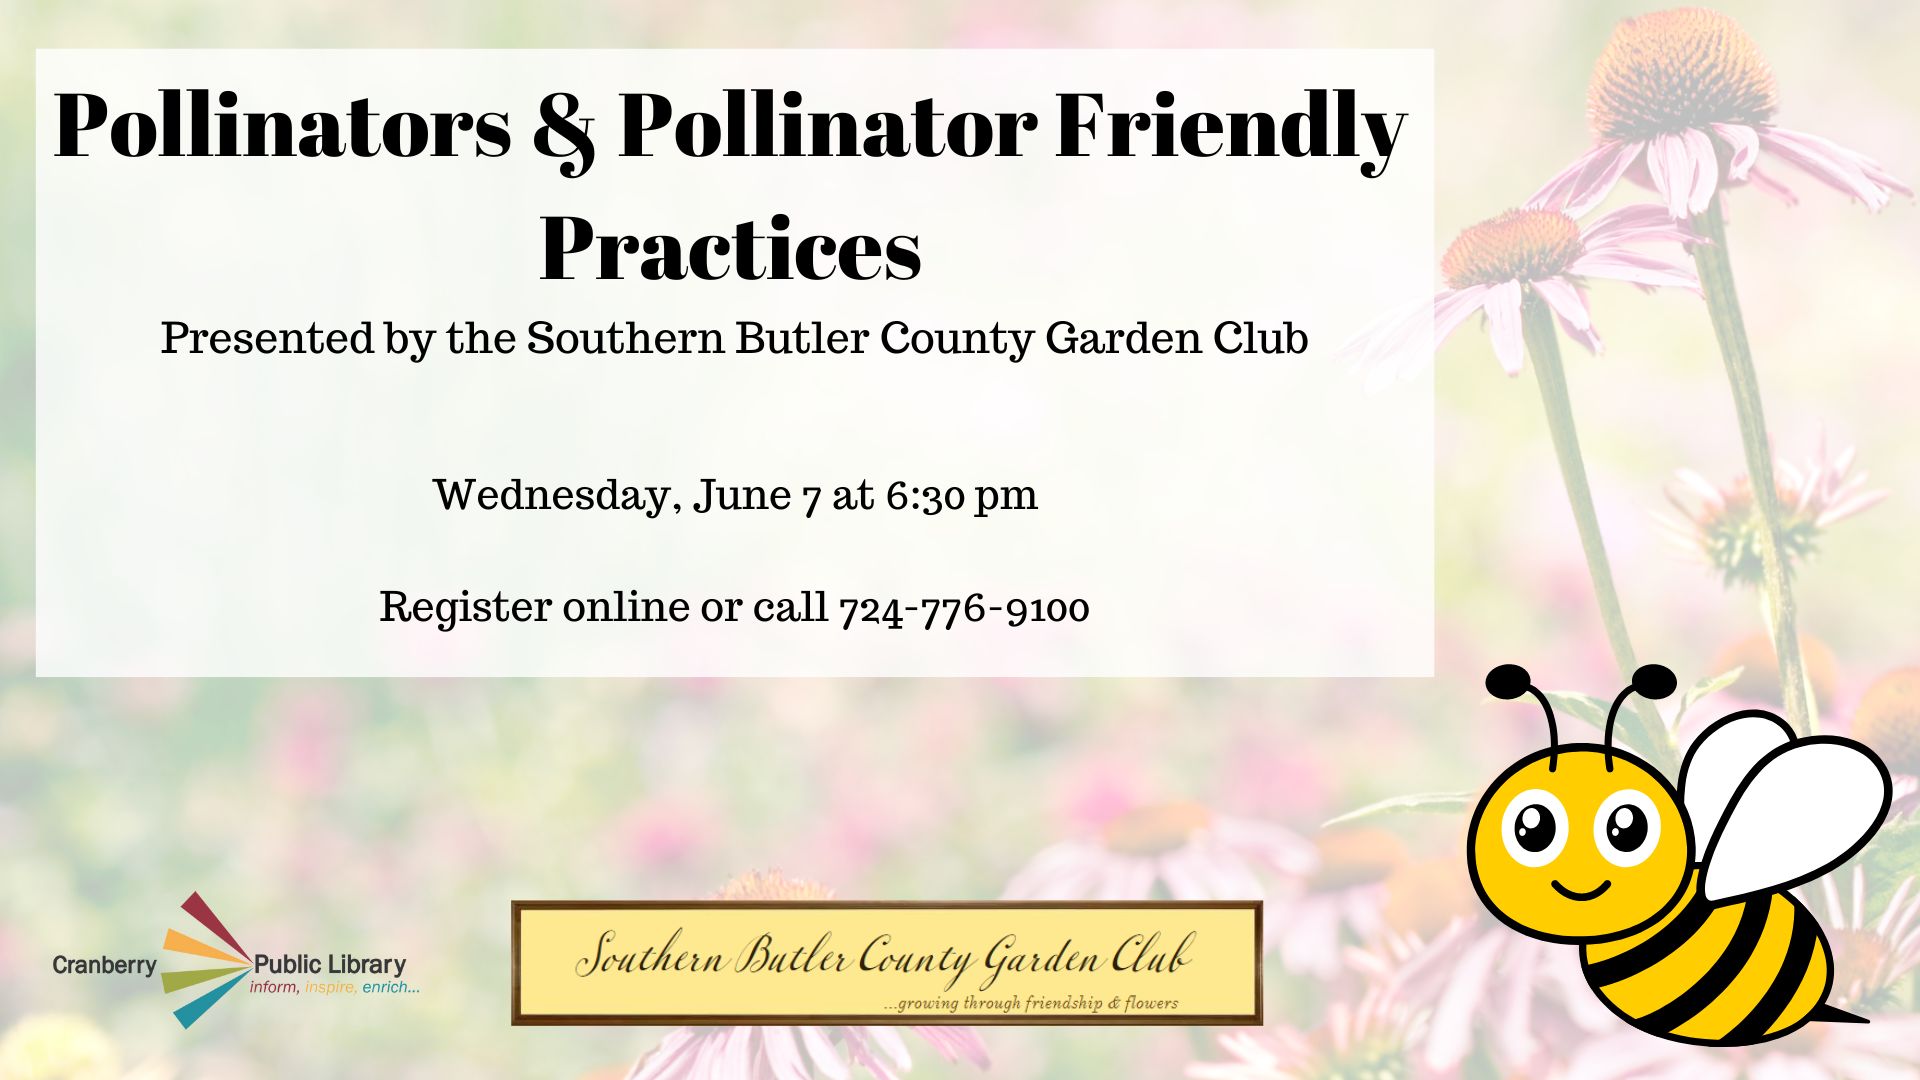 Flyer for Pollinators program